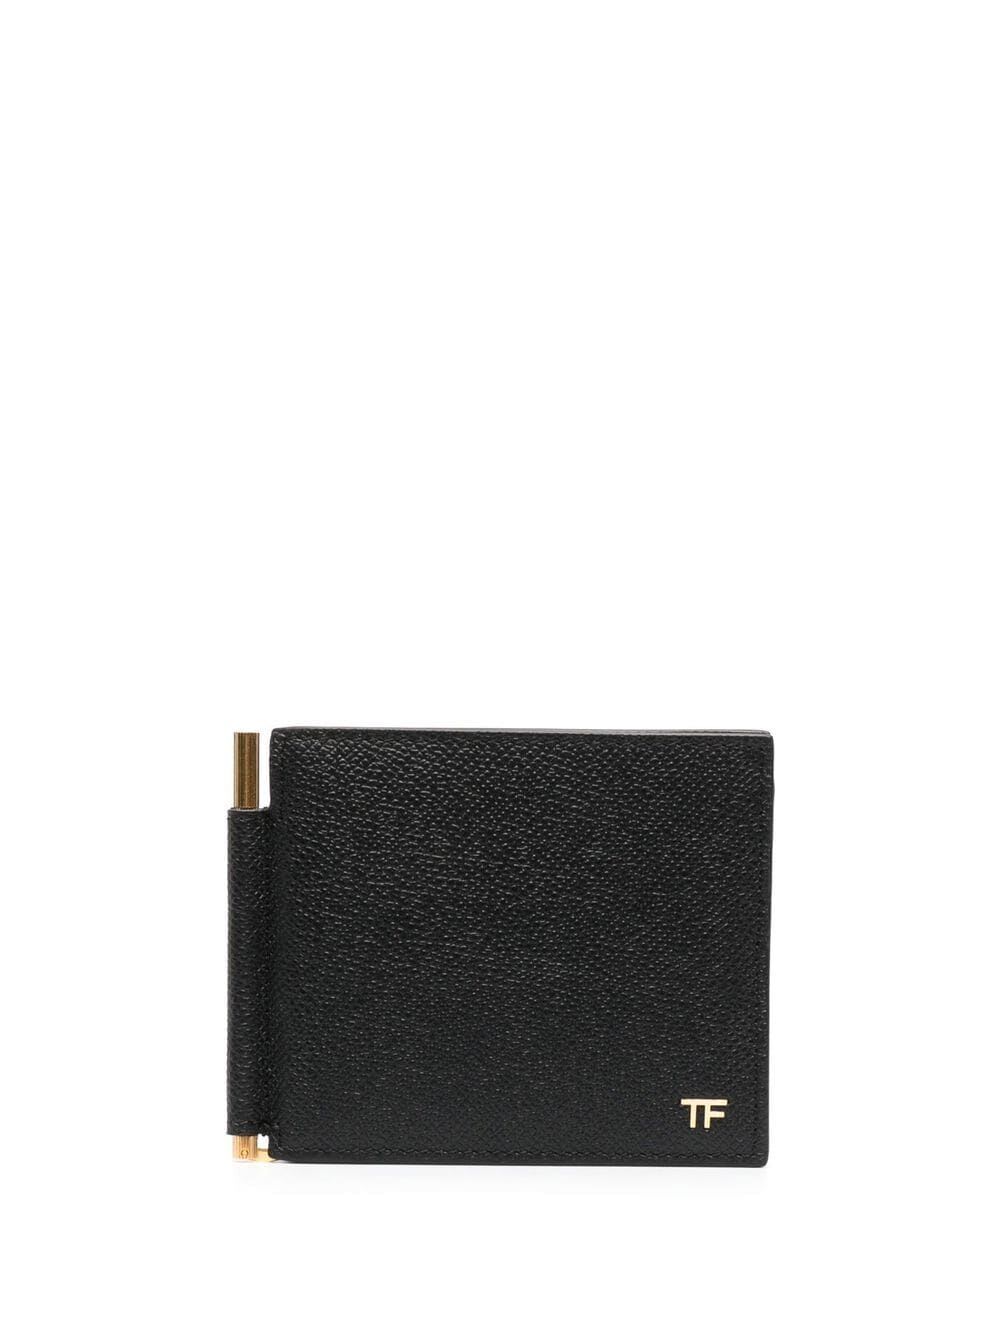 Tom Ford Wallet In Black